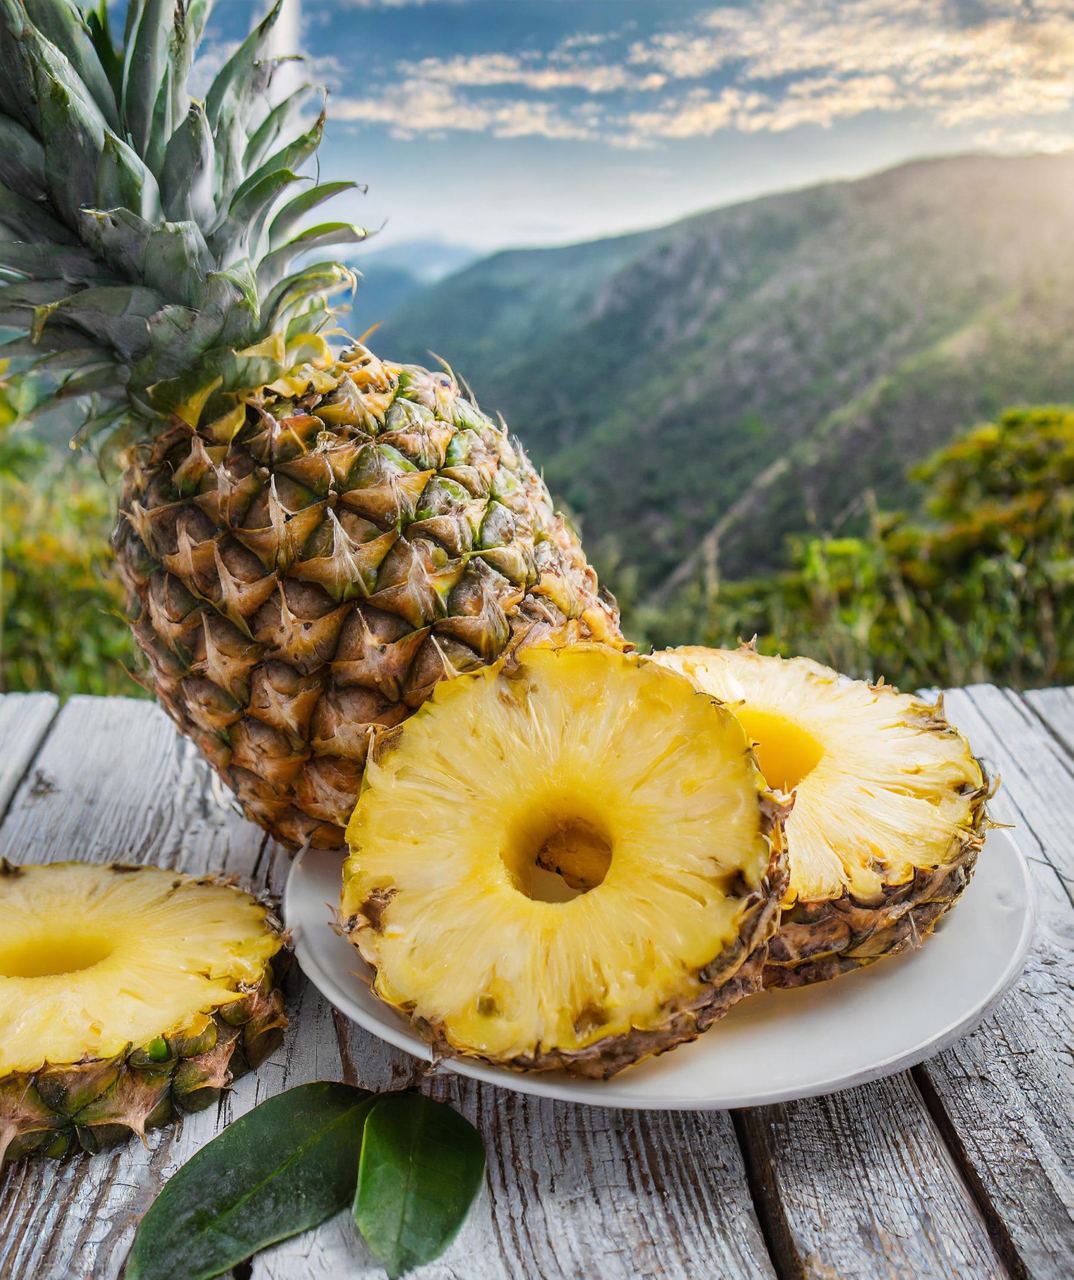 Pineapple field under the sun, showcasing the origin of the fruit